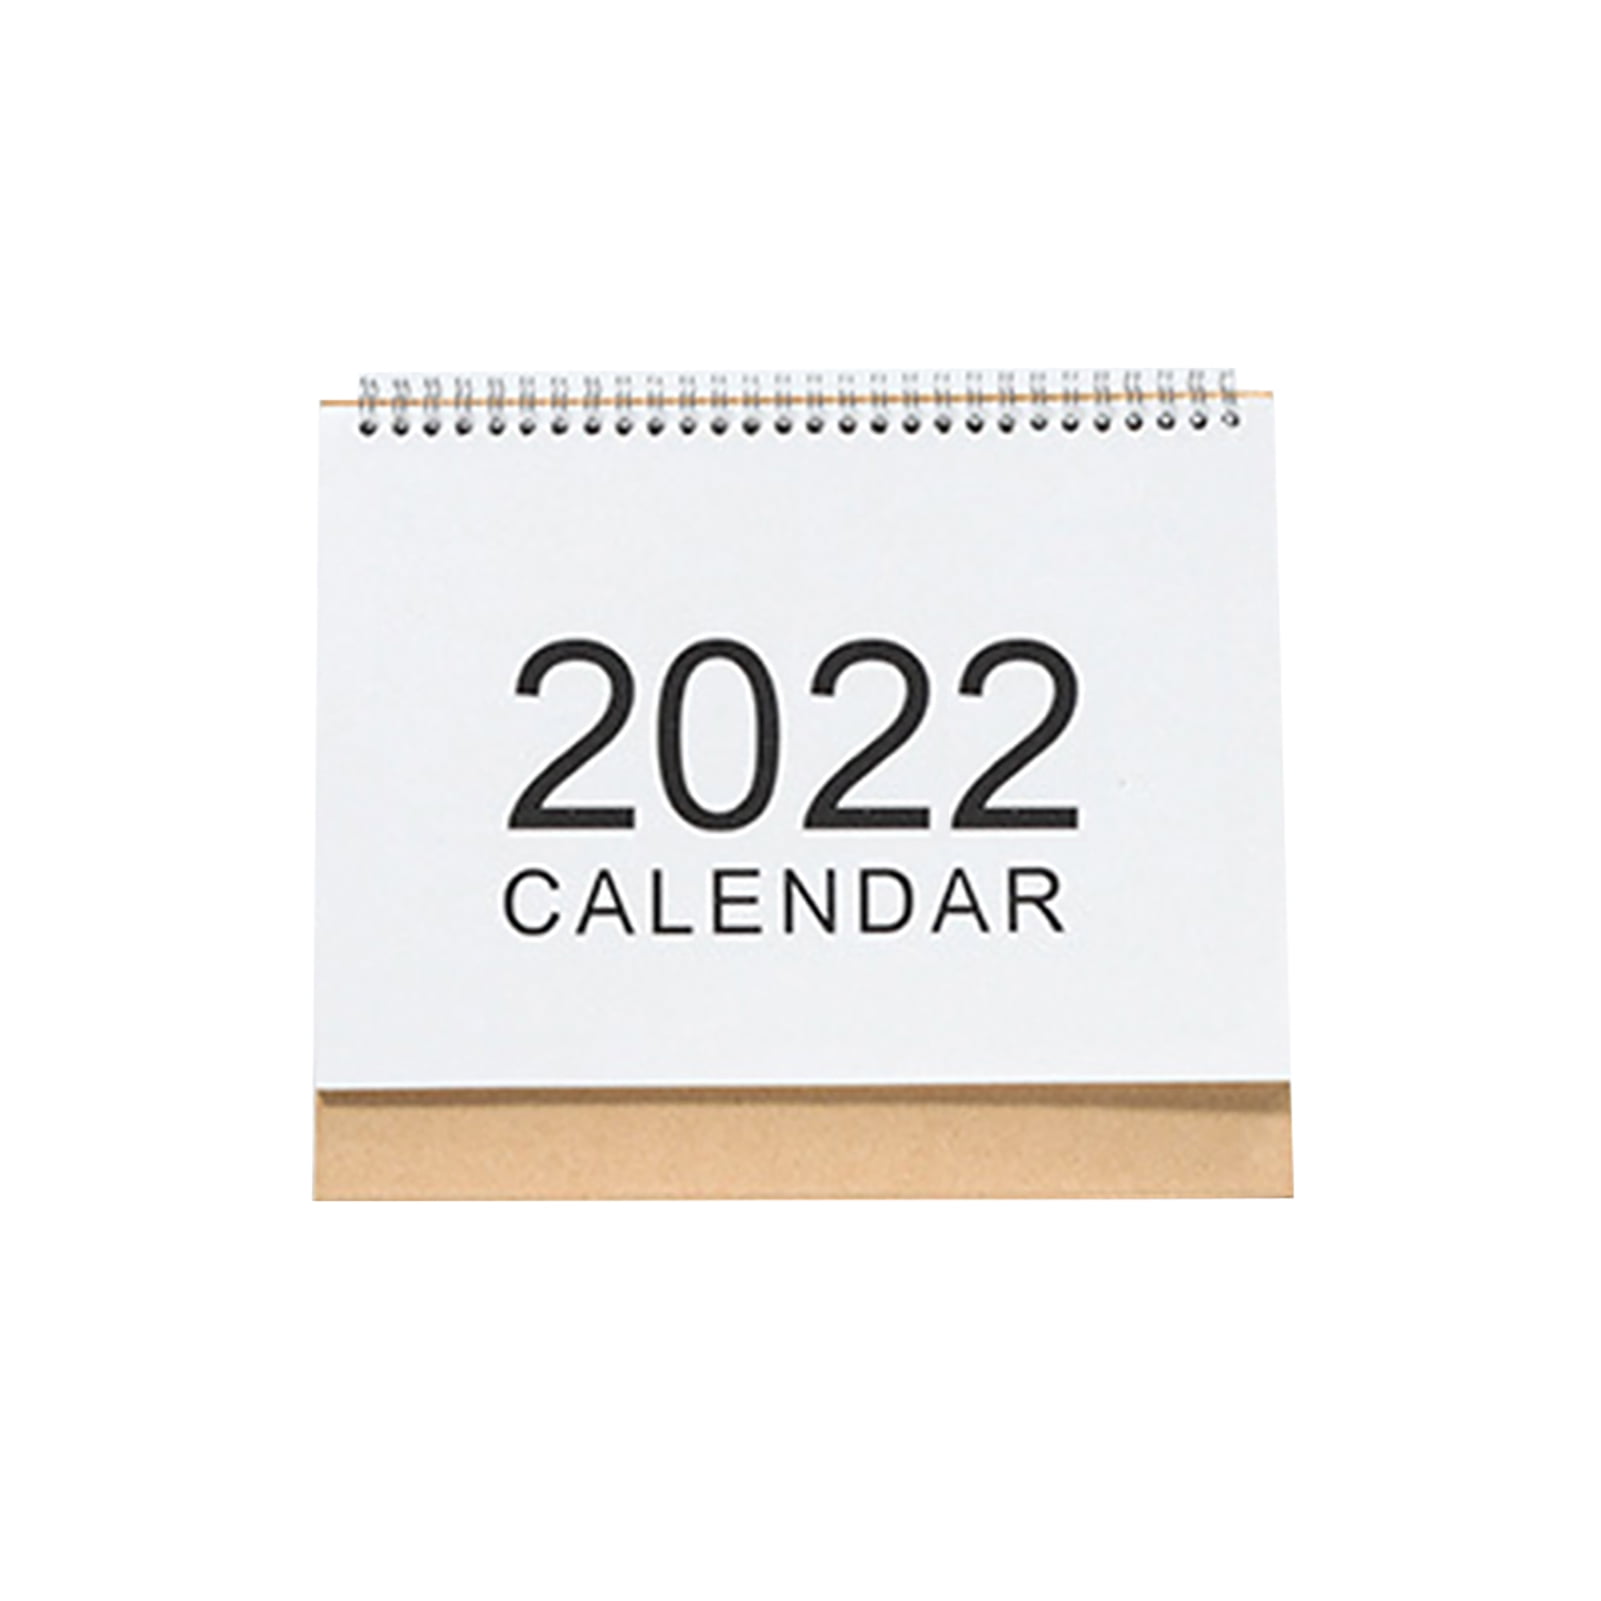 Daily Scheduler Table Planner Desktop Ornaments Mini 2022 Desk Calendar